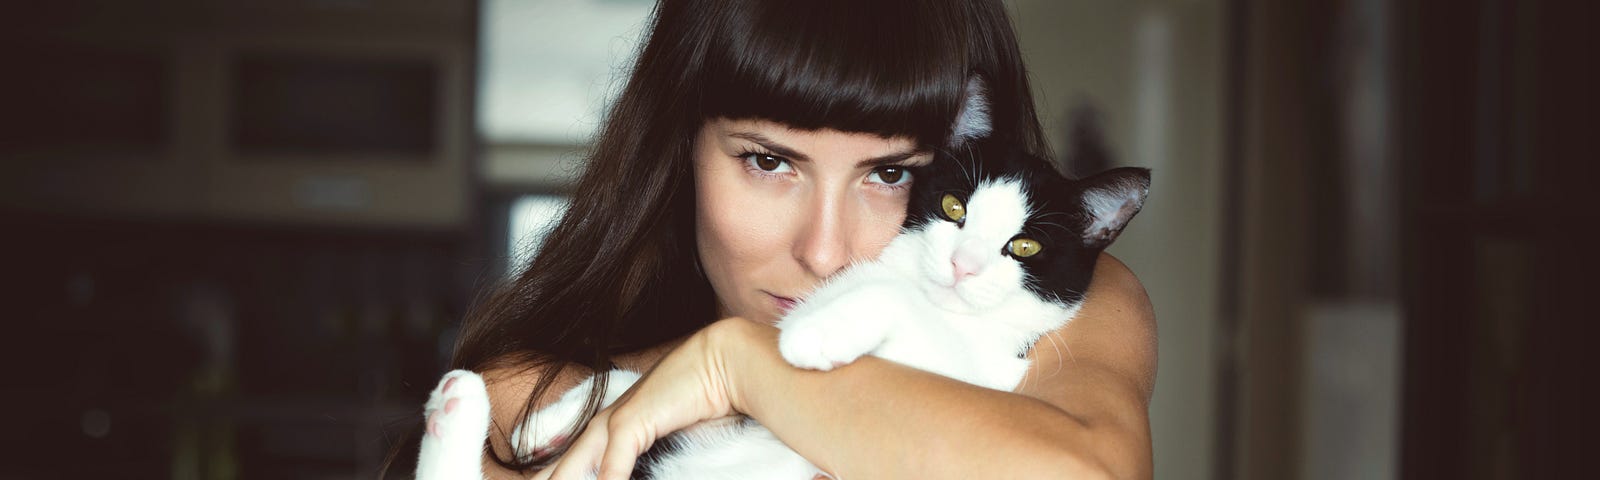 Brunette woman holding a cat